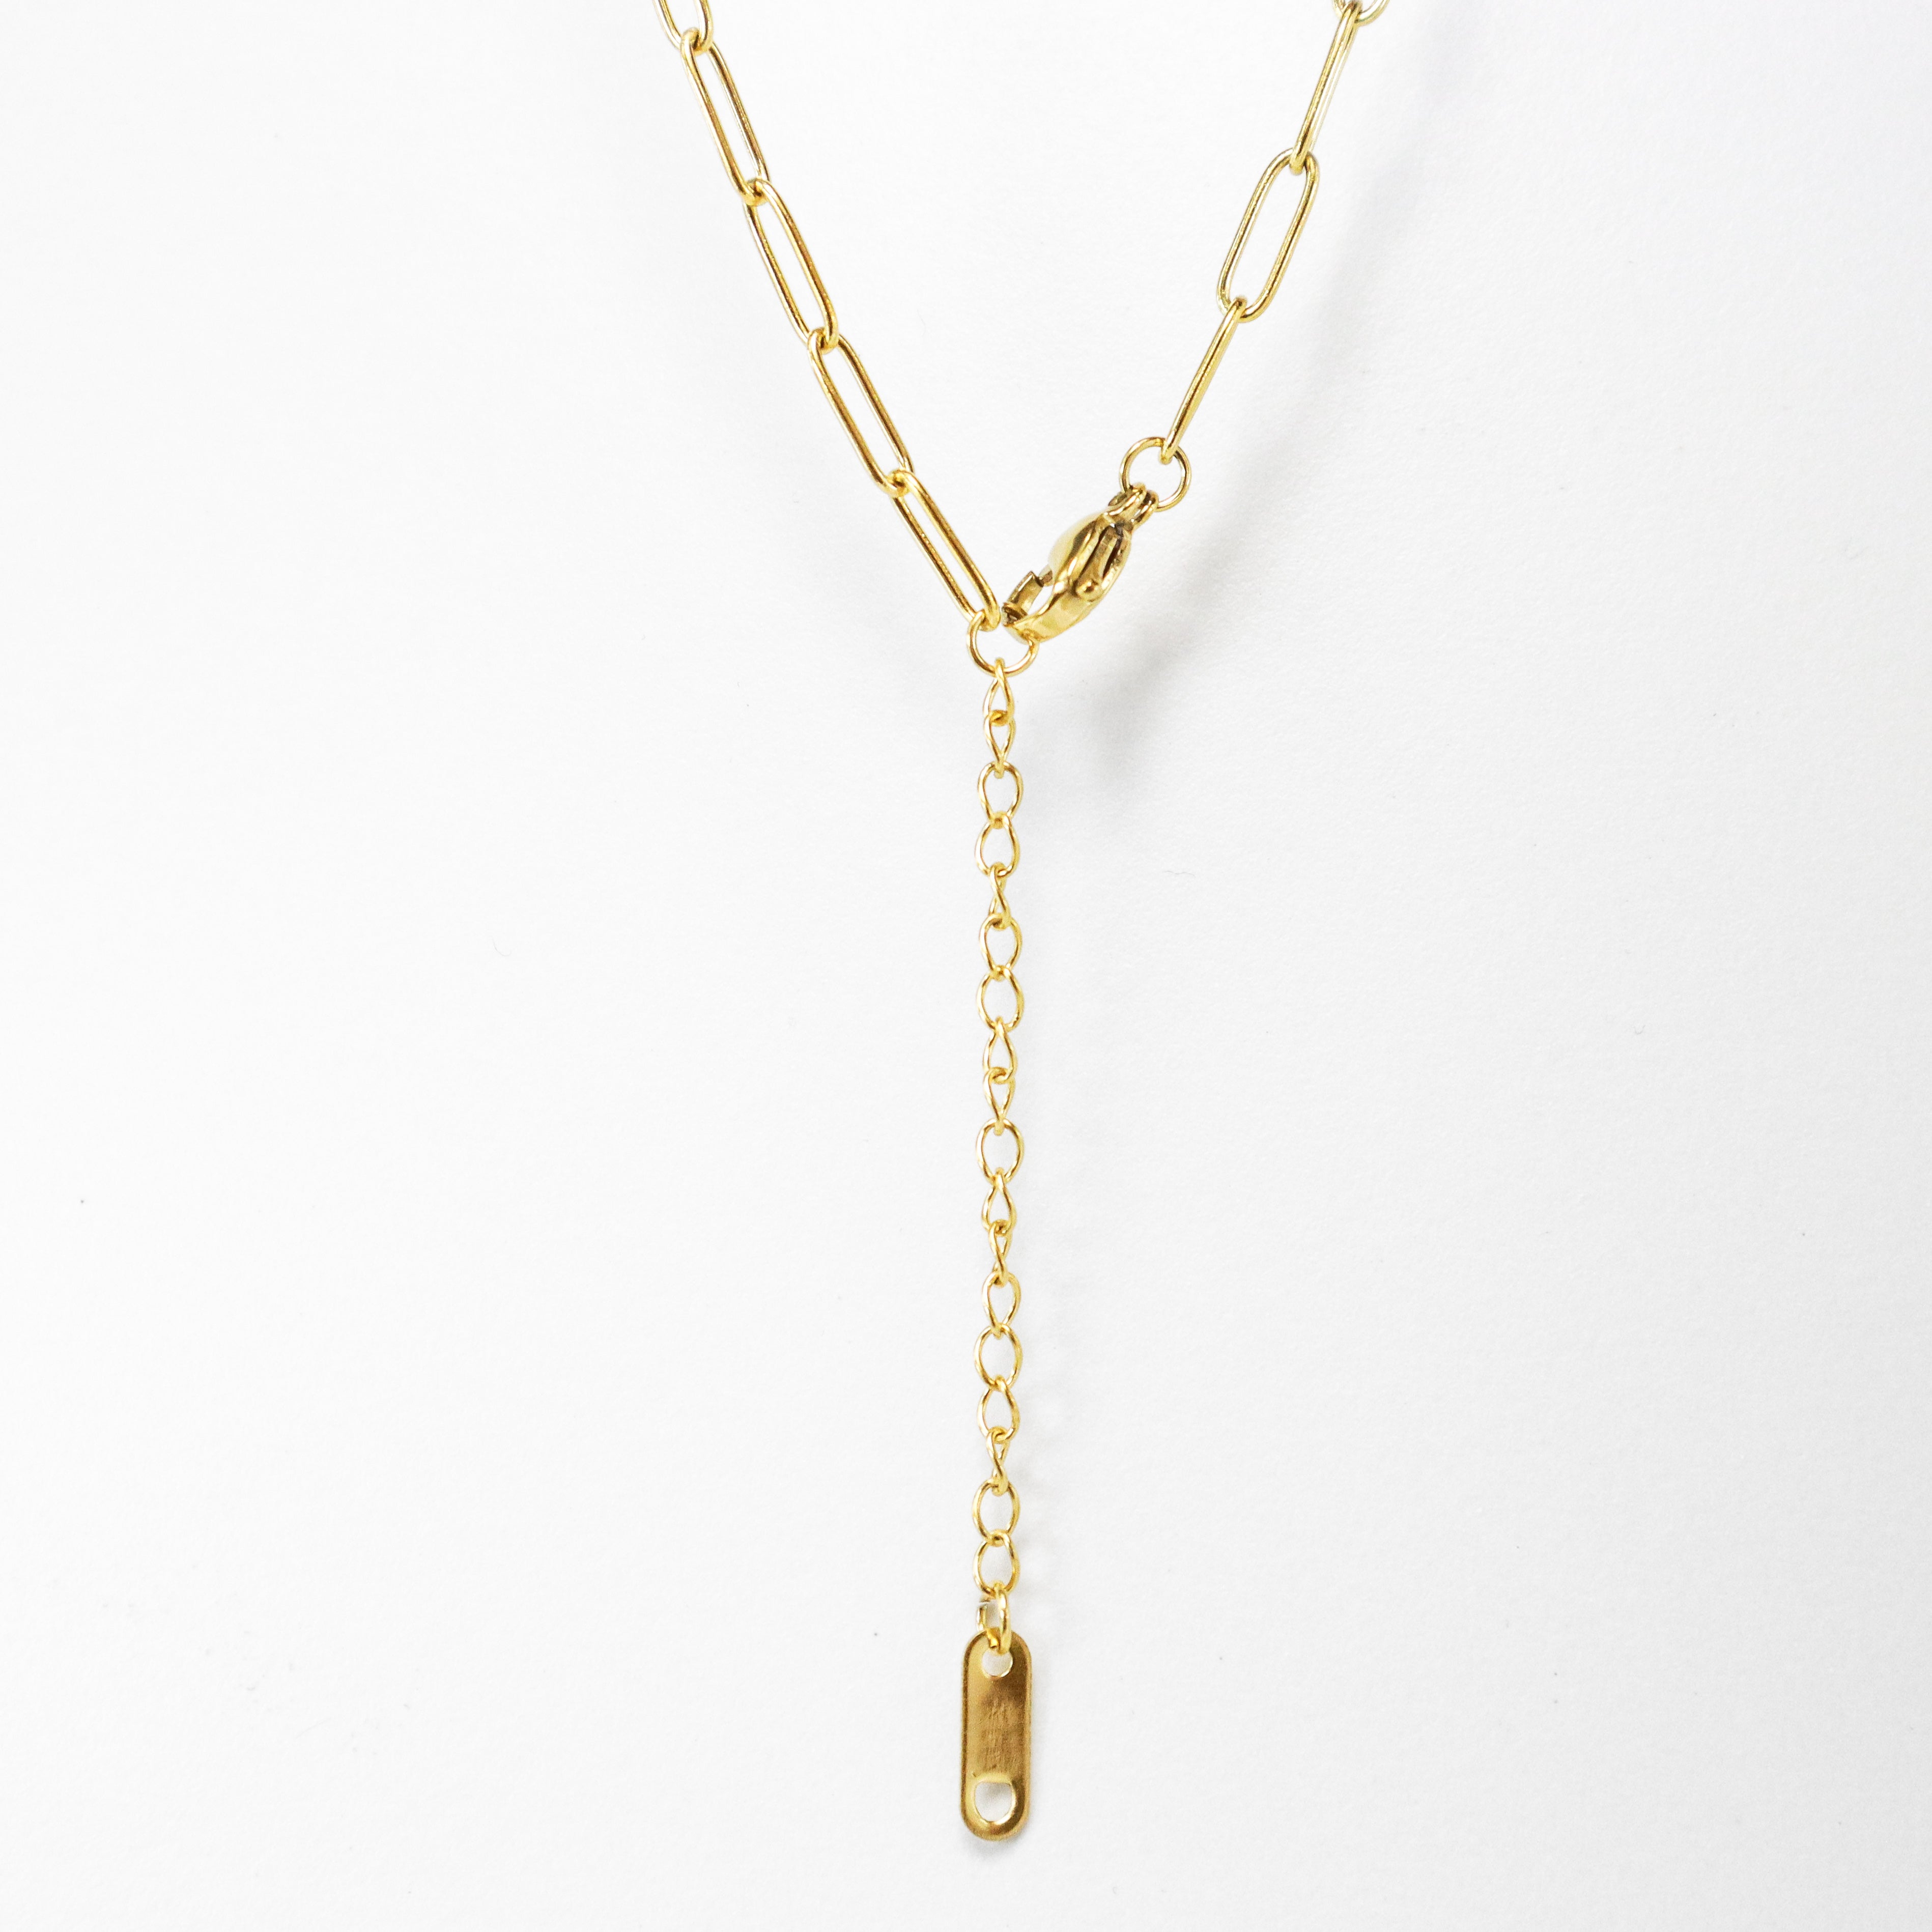 Emerald Cut Green Peridot & Gold Staple Chain Necklace